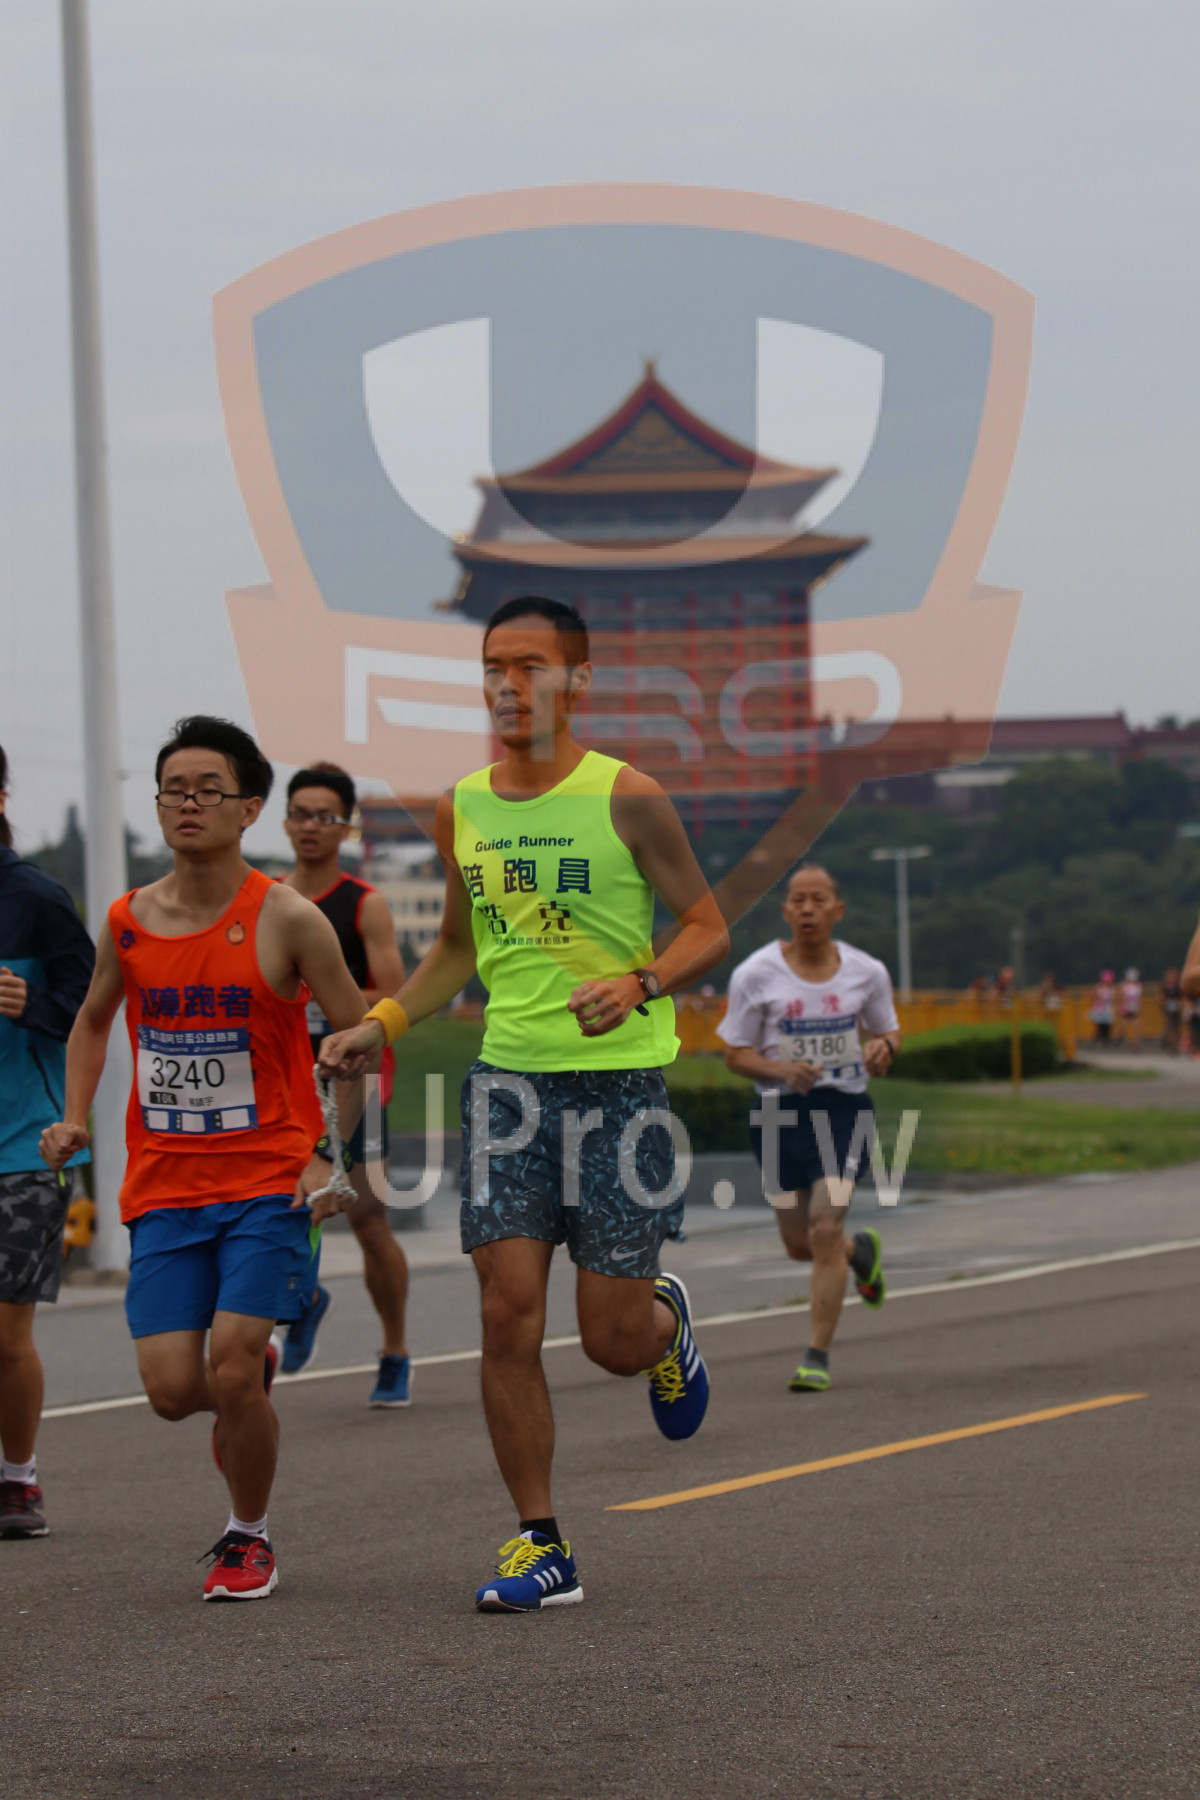 Guide Runner,,3240,3180|2018 第九屆阿甘盃公益路跑|Soryu Asuka Langley